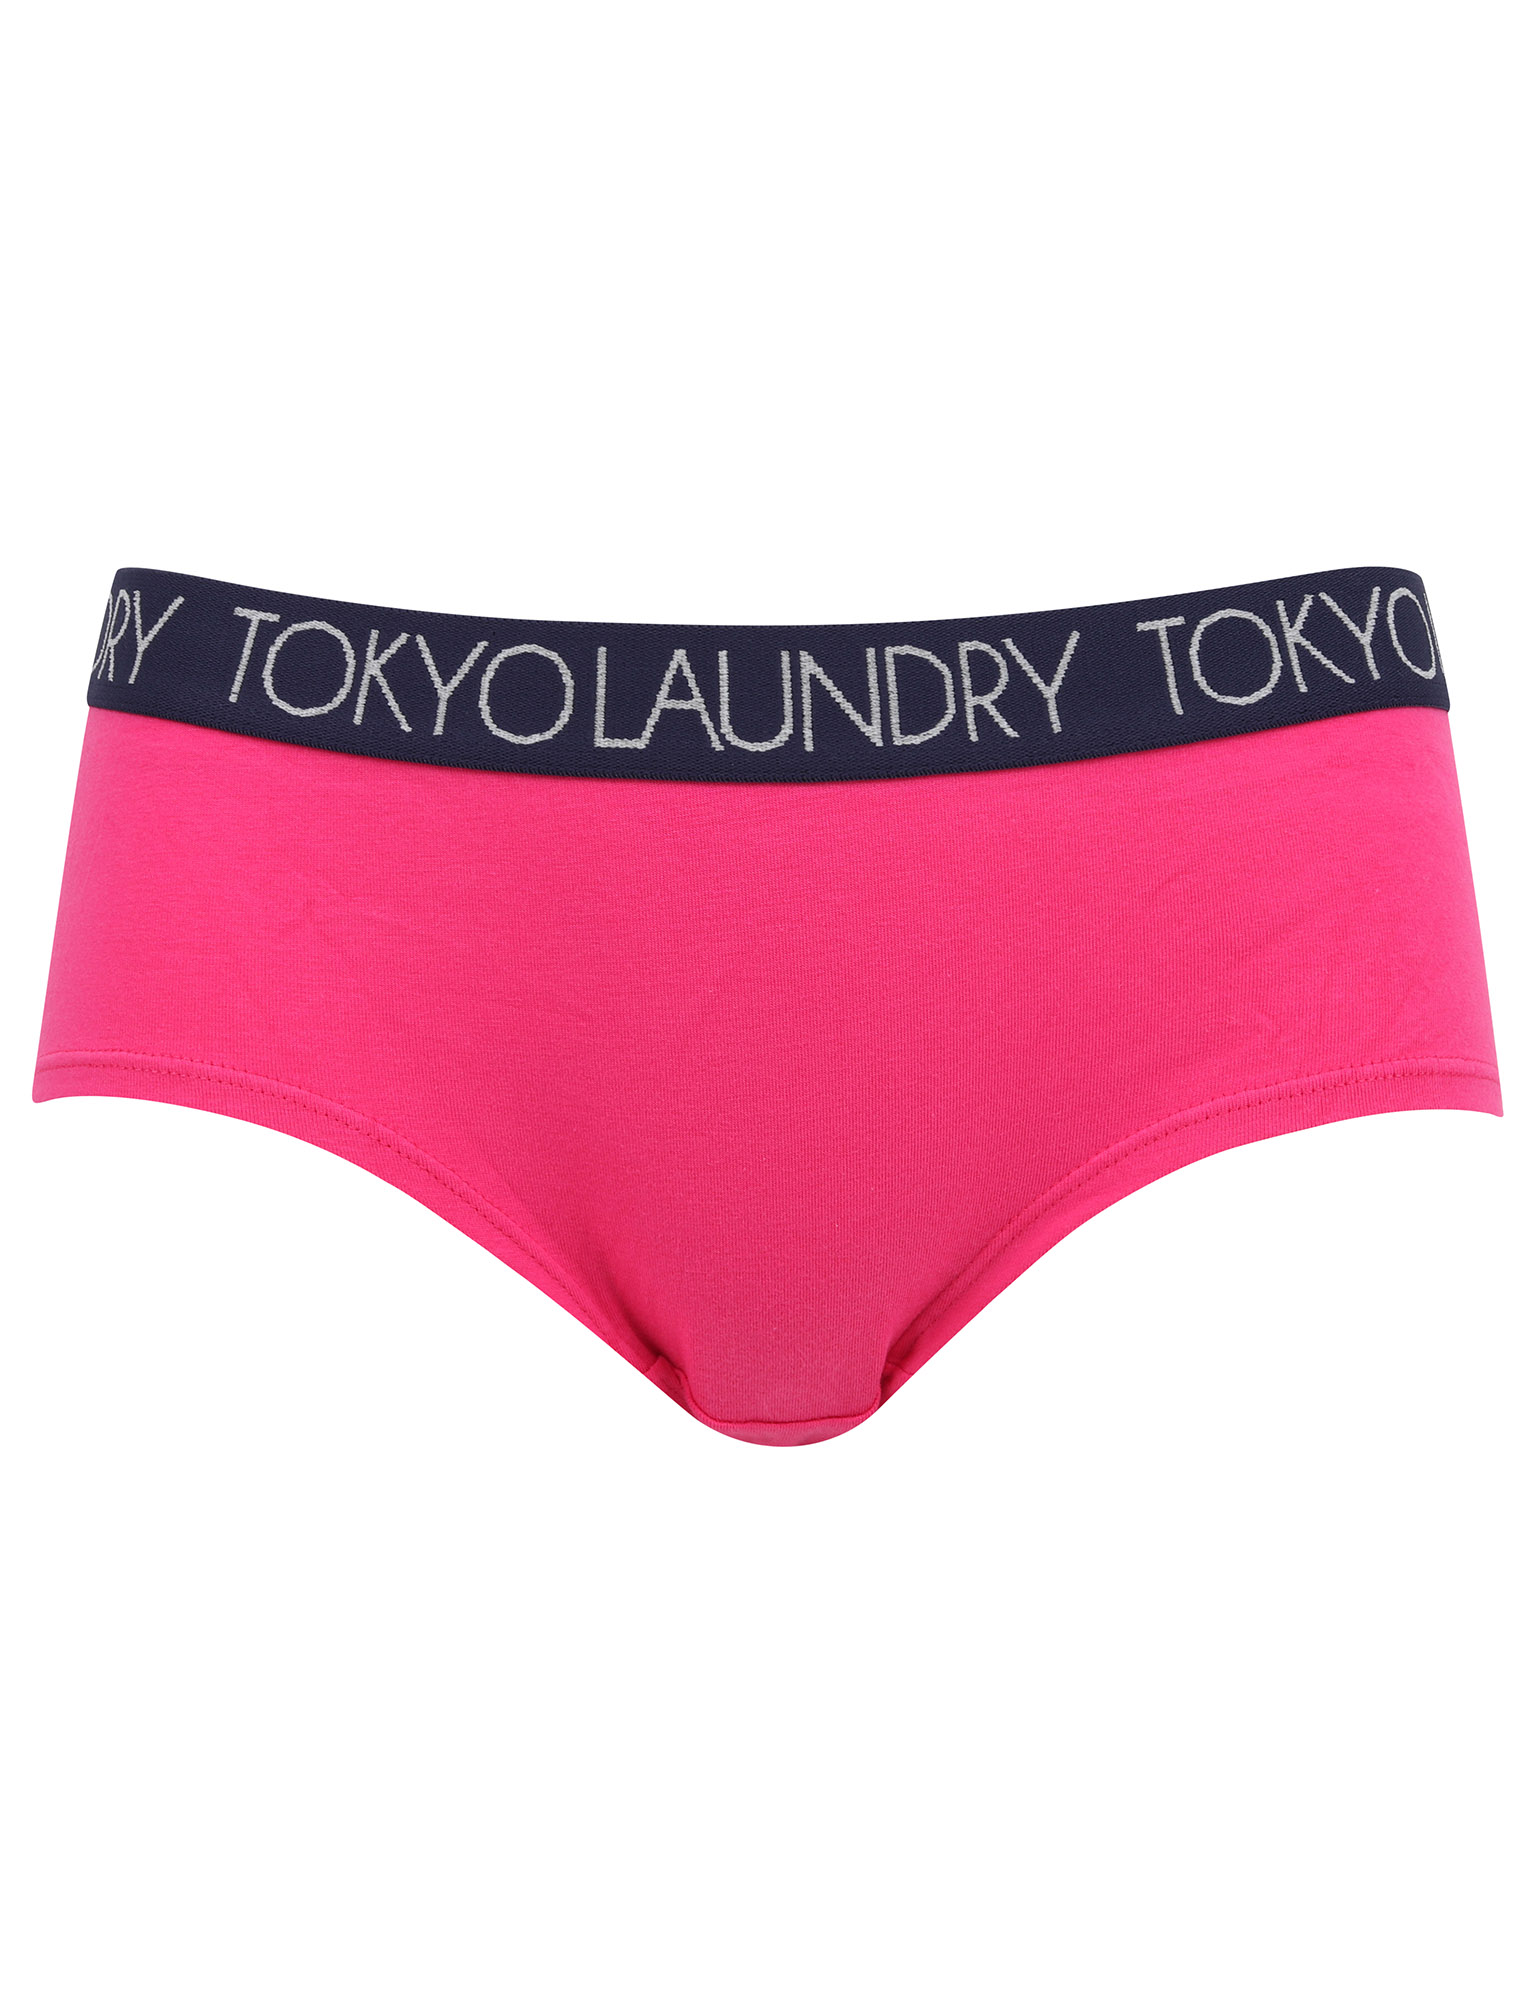 Tokyo Laundry Women's 5 Pack Briefs Knickers Underwear Boxers ...